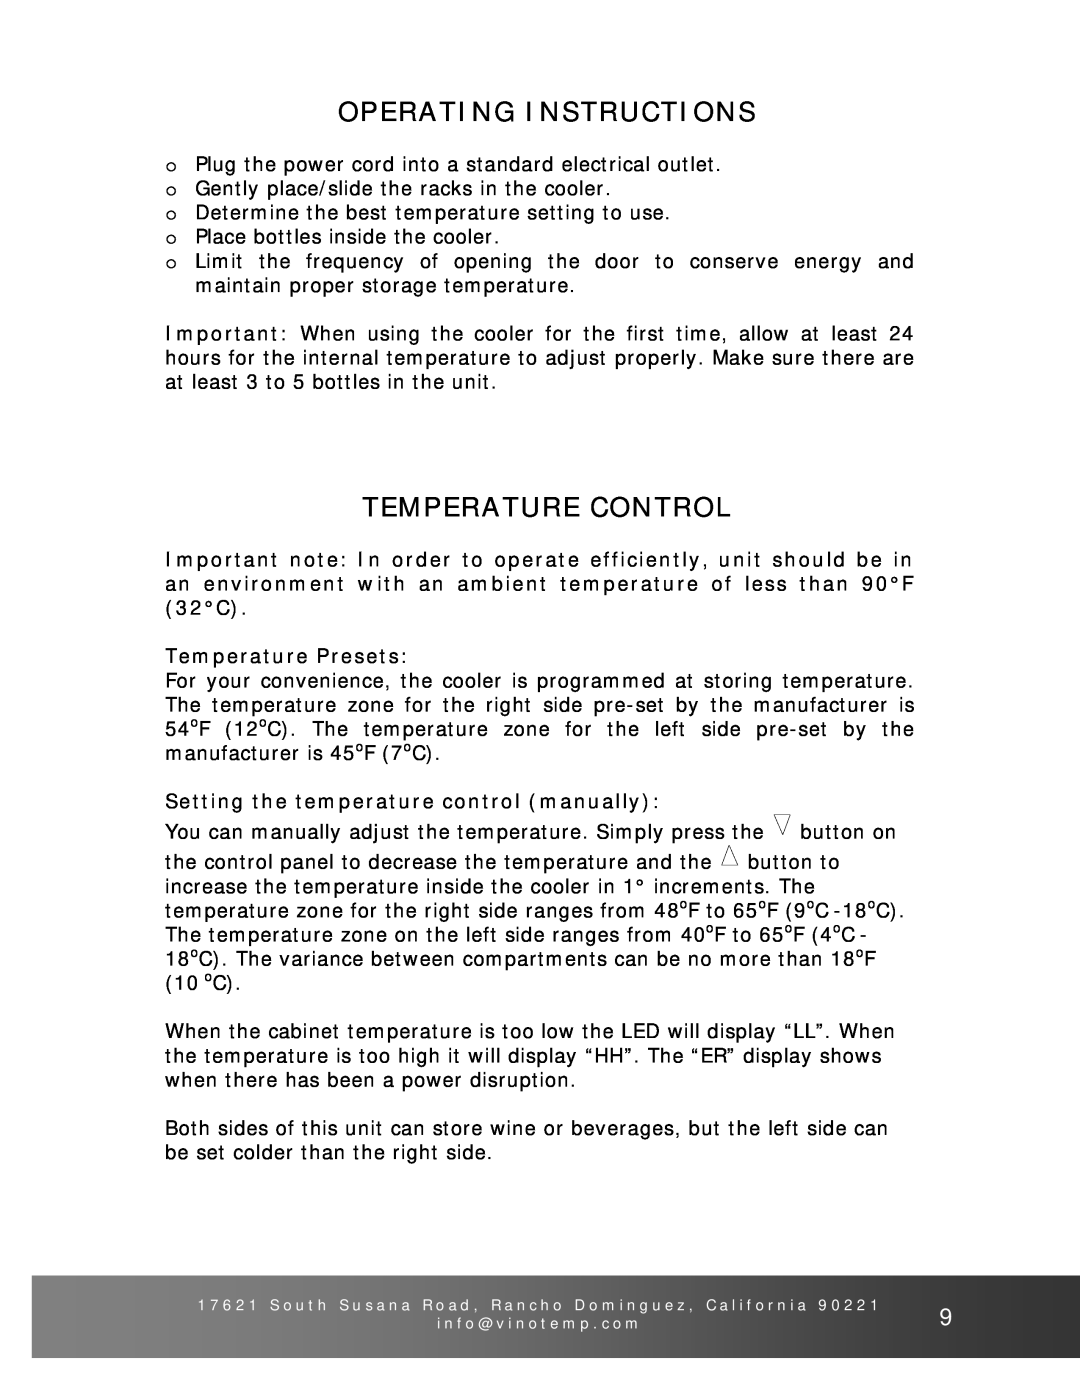 Vinotemp VT-38 Operating Instructions, Temperature Control, Temperature Presets, Setting the temperature control manually 